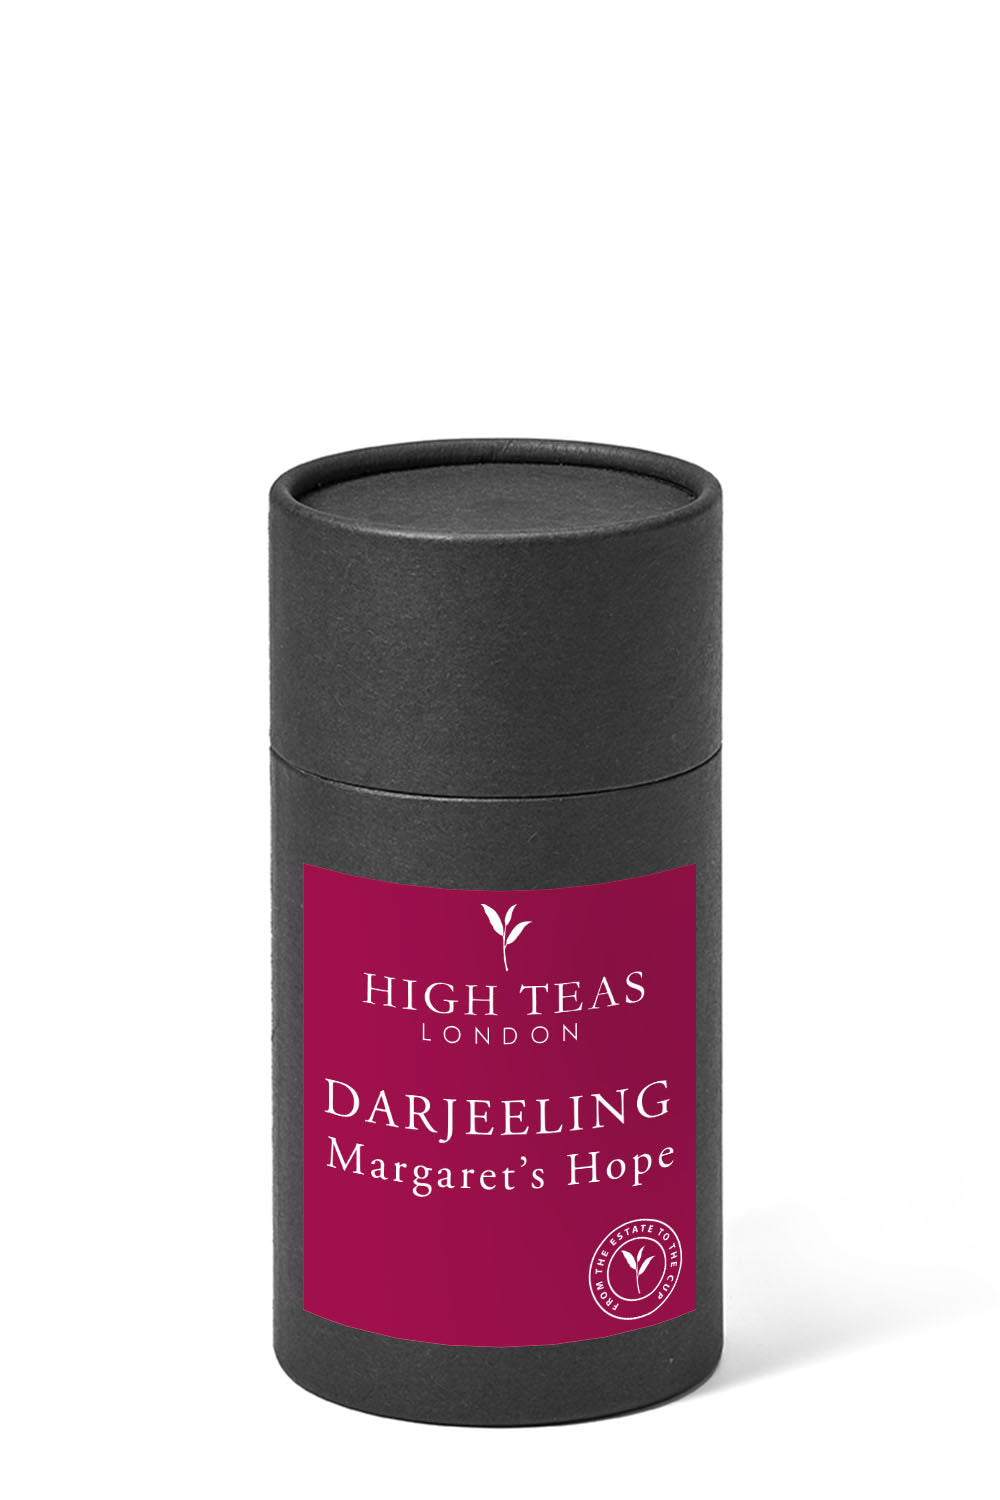 Darjeeling Margaret's Hope-60g gift-Loose Leaf Tea-High Teas